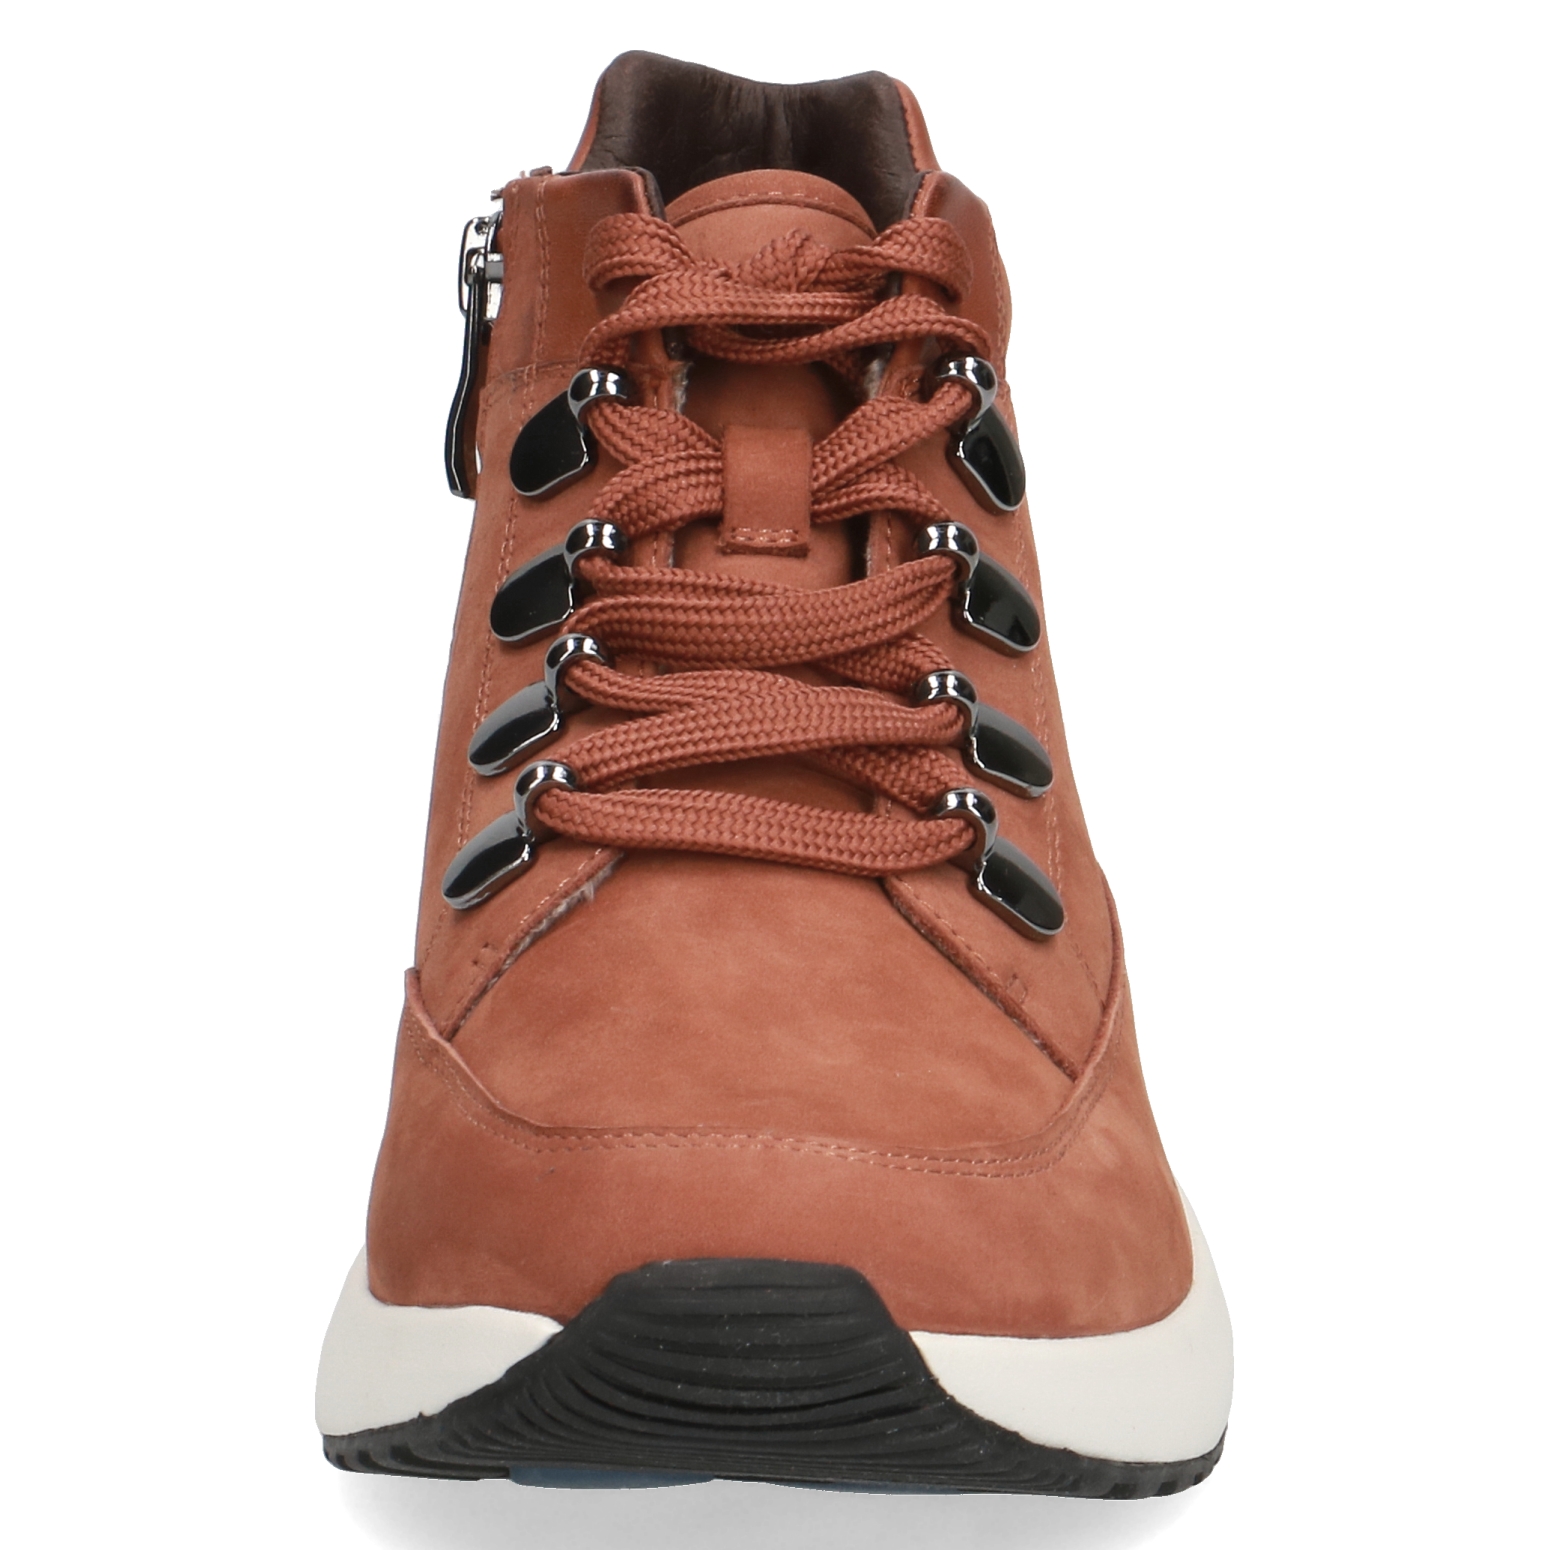 Caprice Sneaker - Brown Nubuck leather